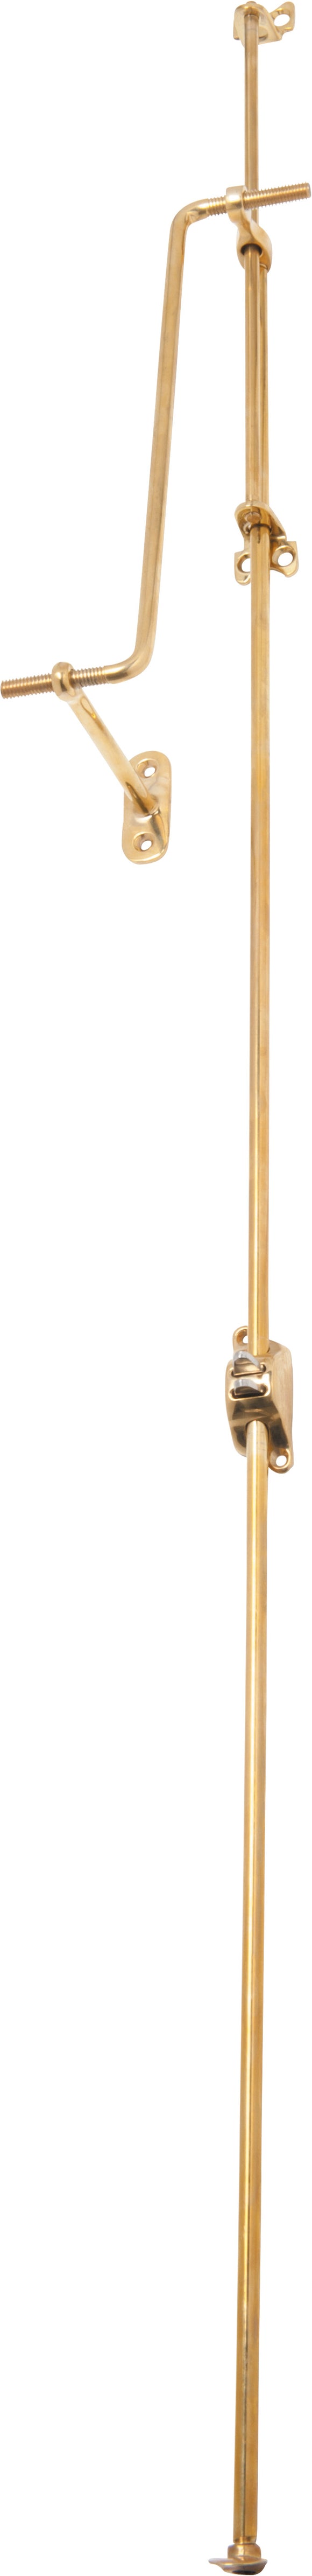 Fanlight Window Operator Polished Brass Unlacquered H900-1115mm